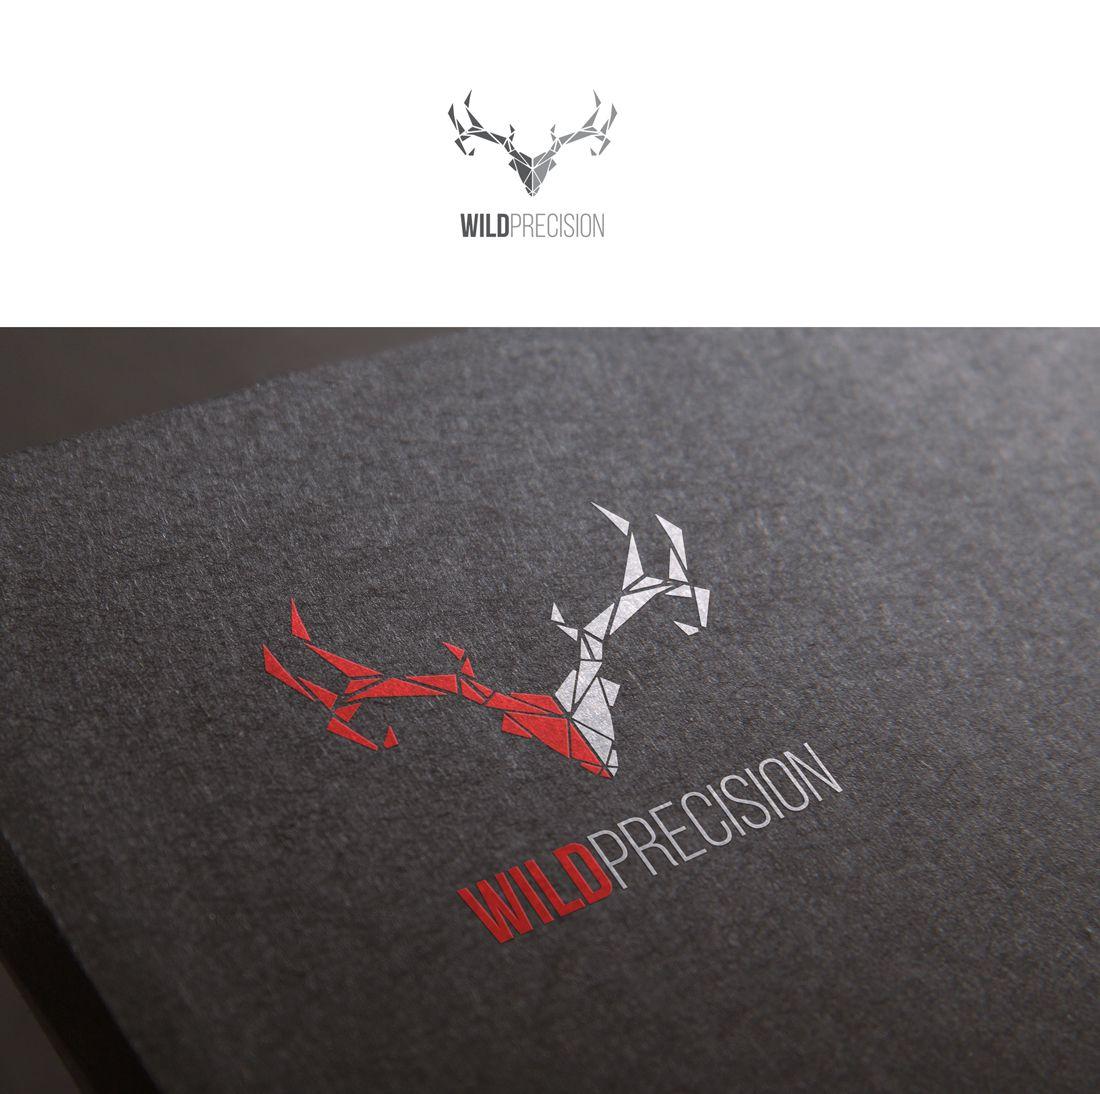 Precision Logo - Serious, Professional, Mechanical Engineering Logo Design for WILD ...